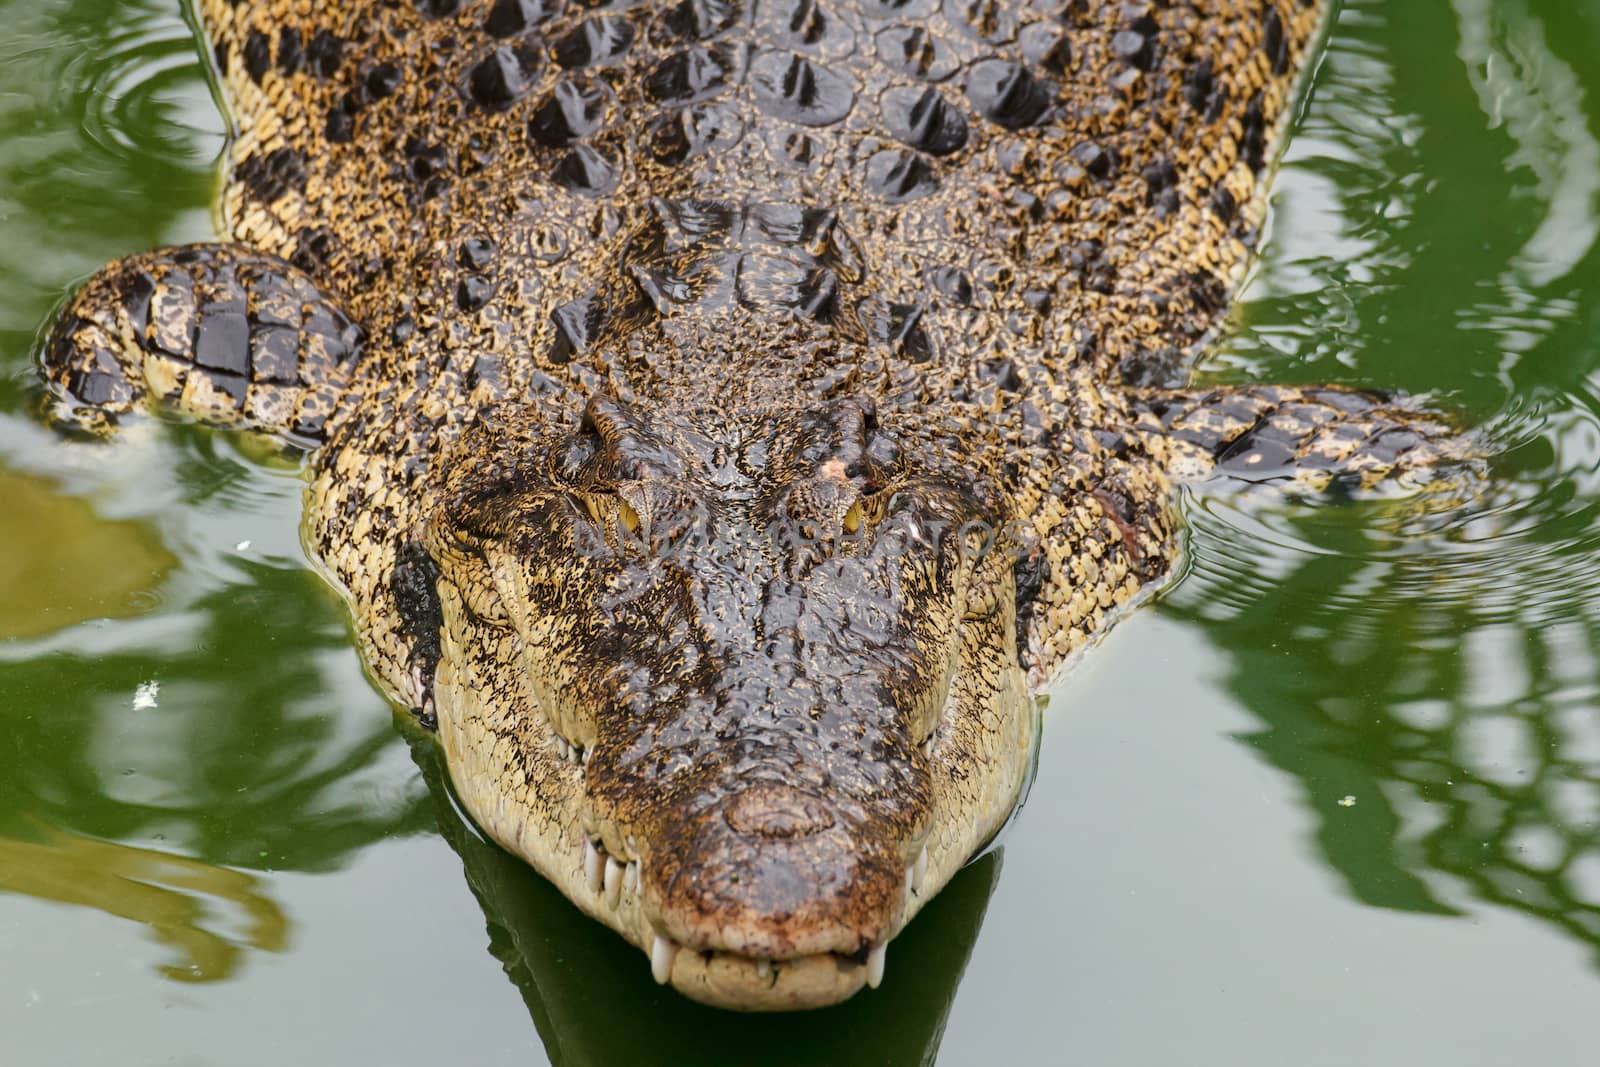 Siamese crocodile in water by vitawin